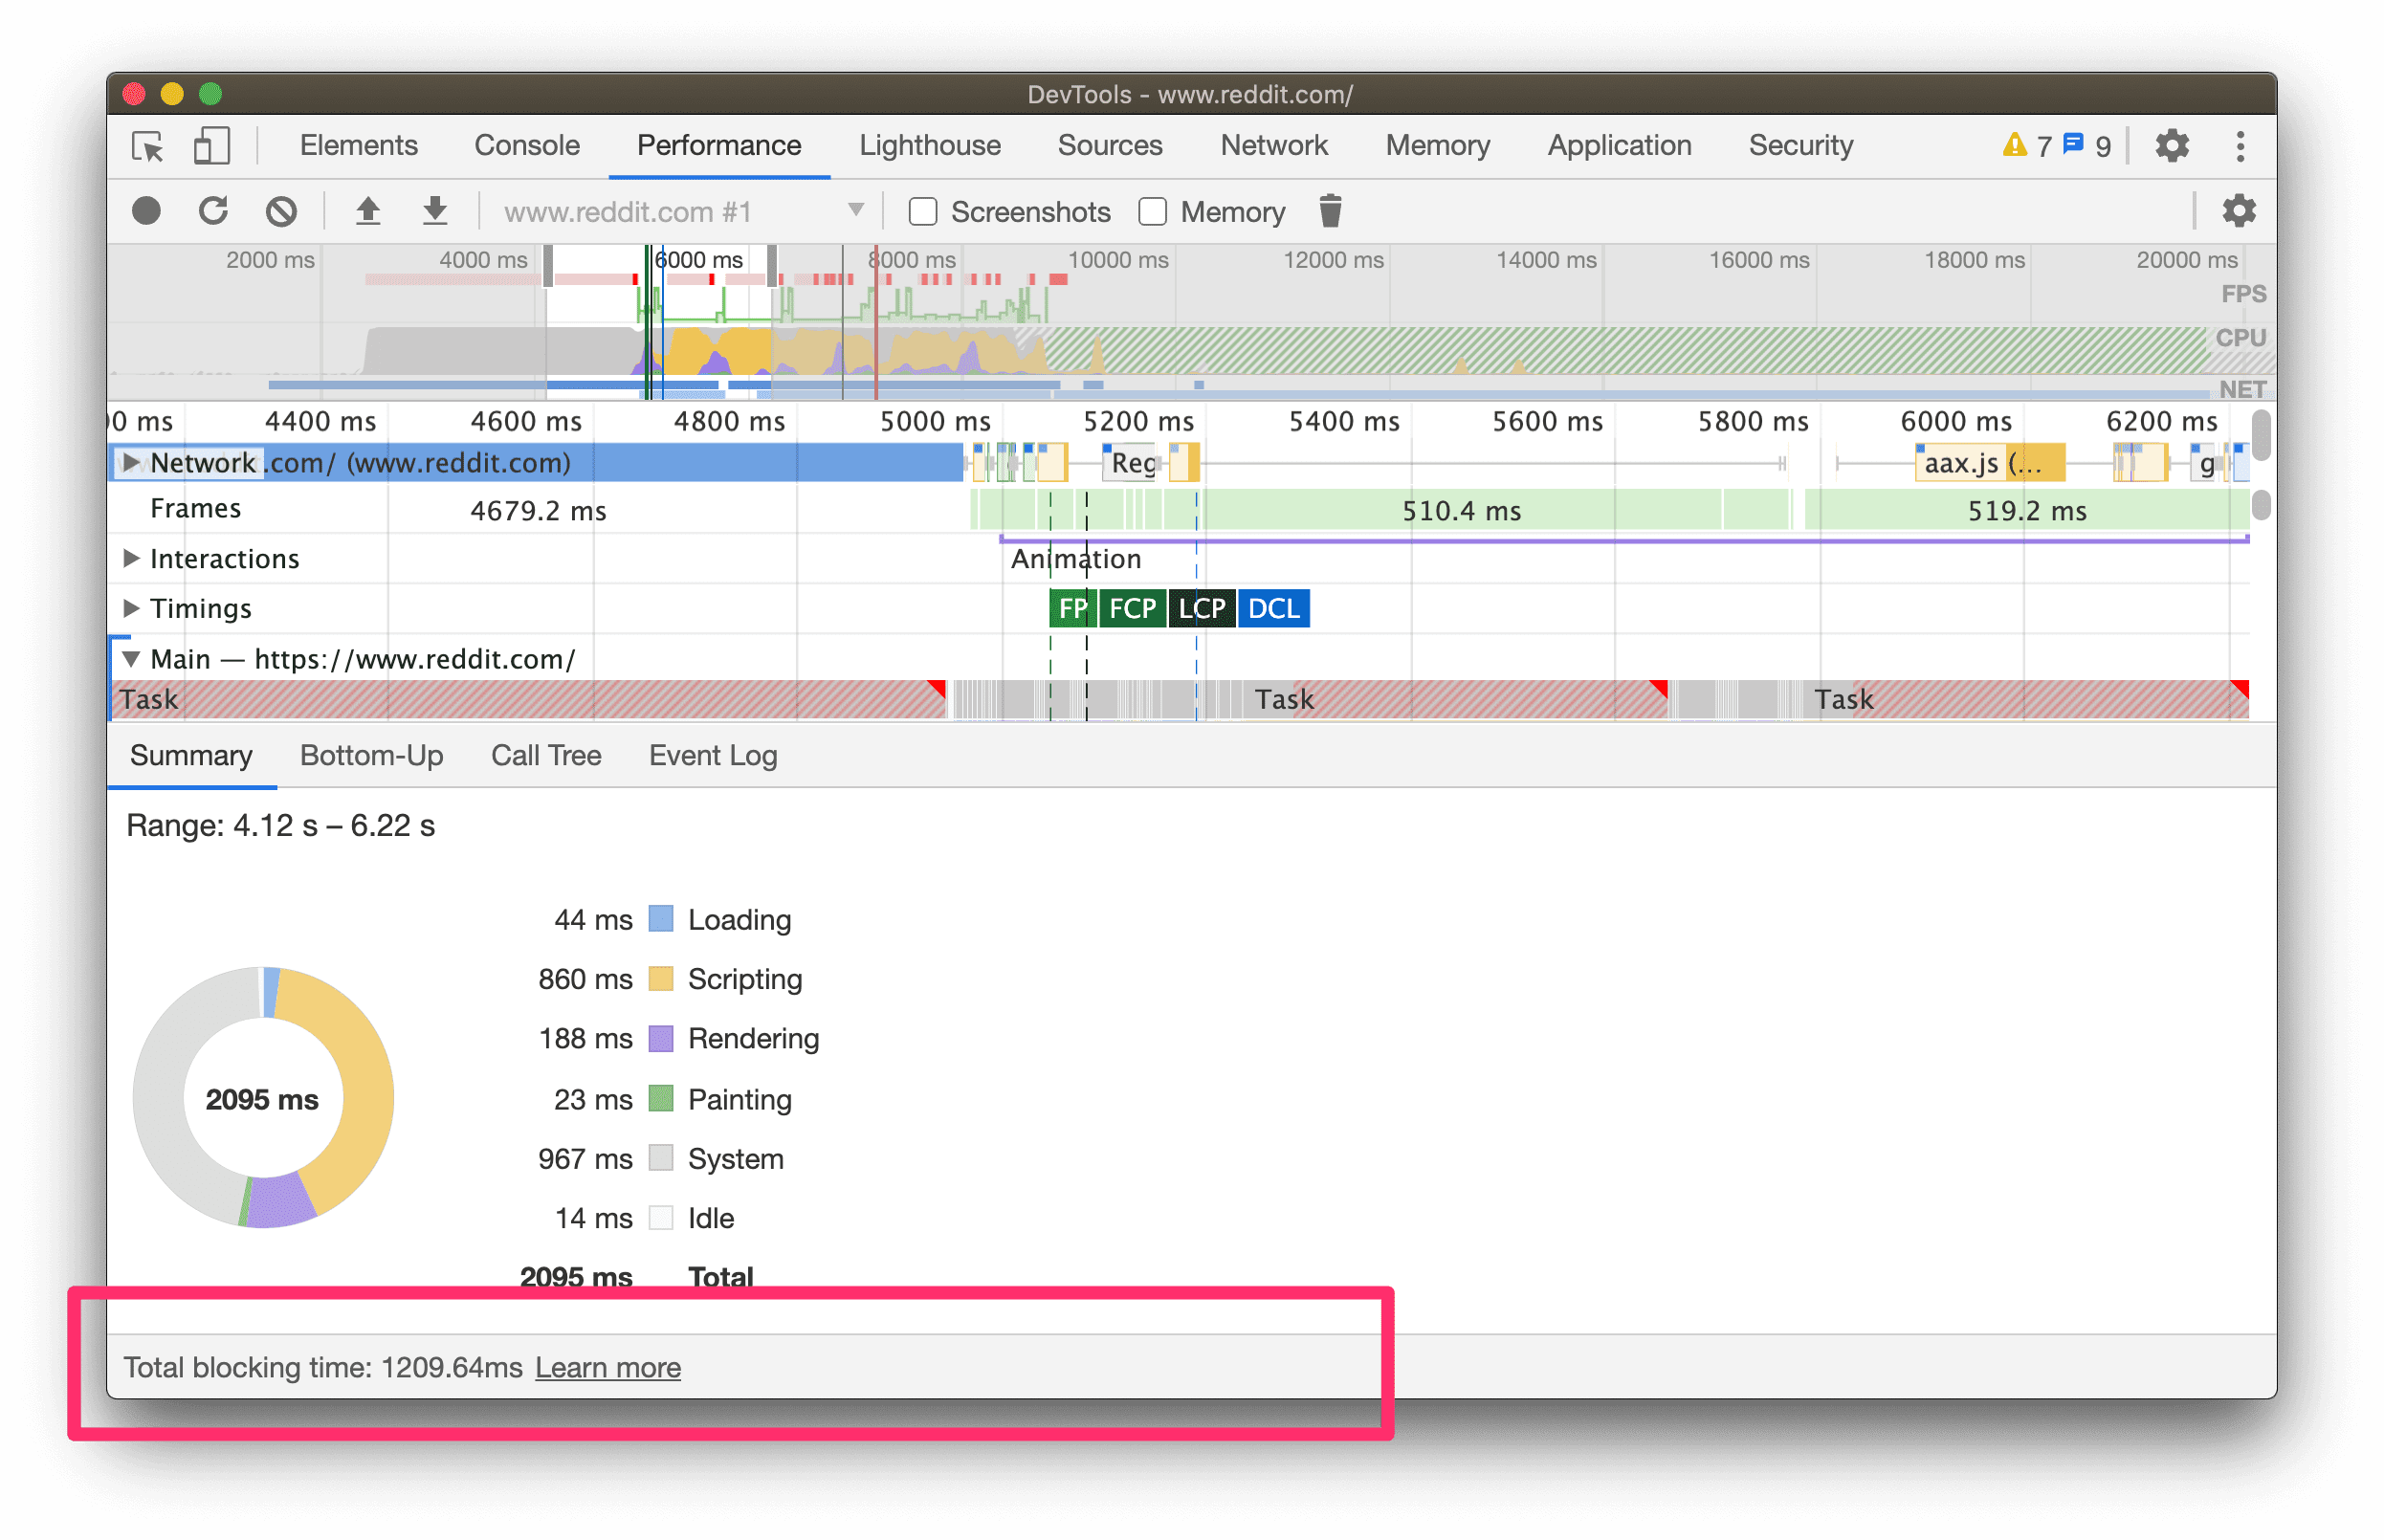 DevTools 성능 패널의 바닥글에 표시된 총 차단 시간